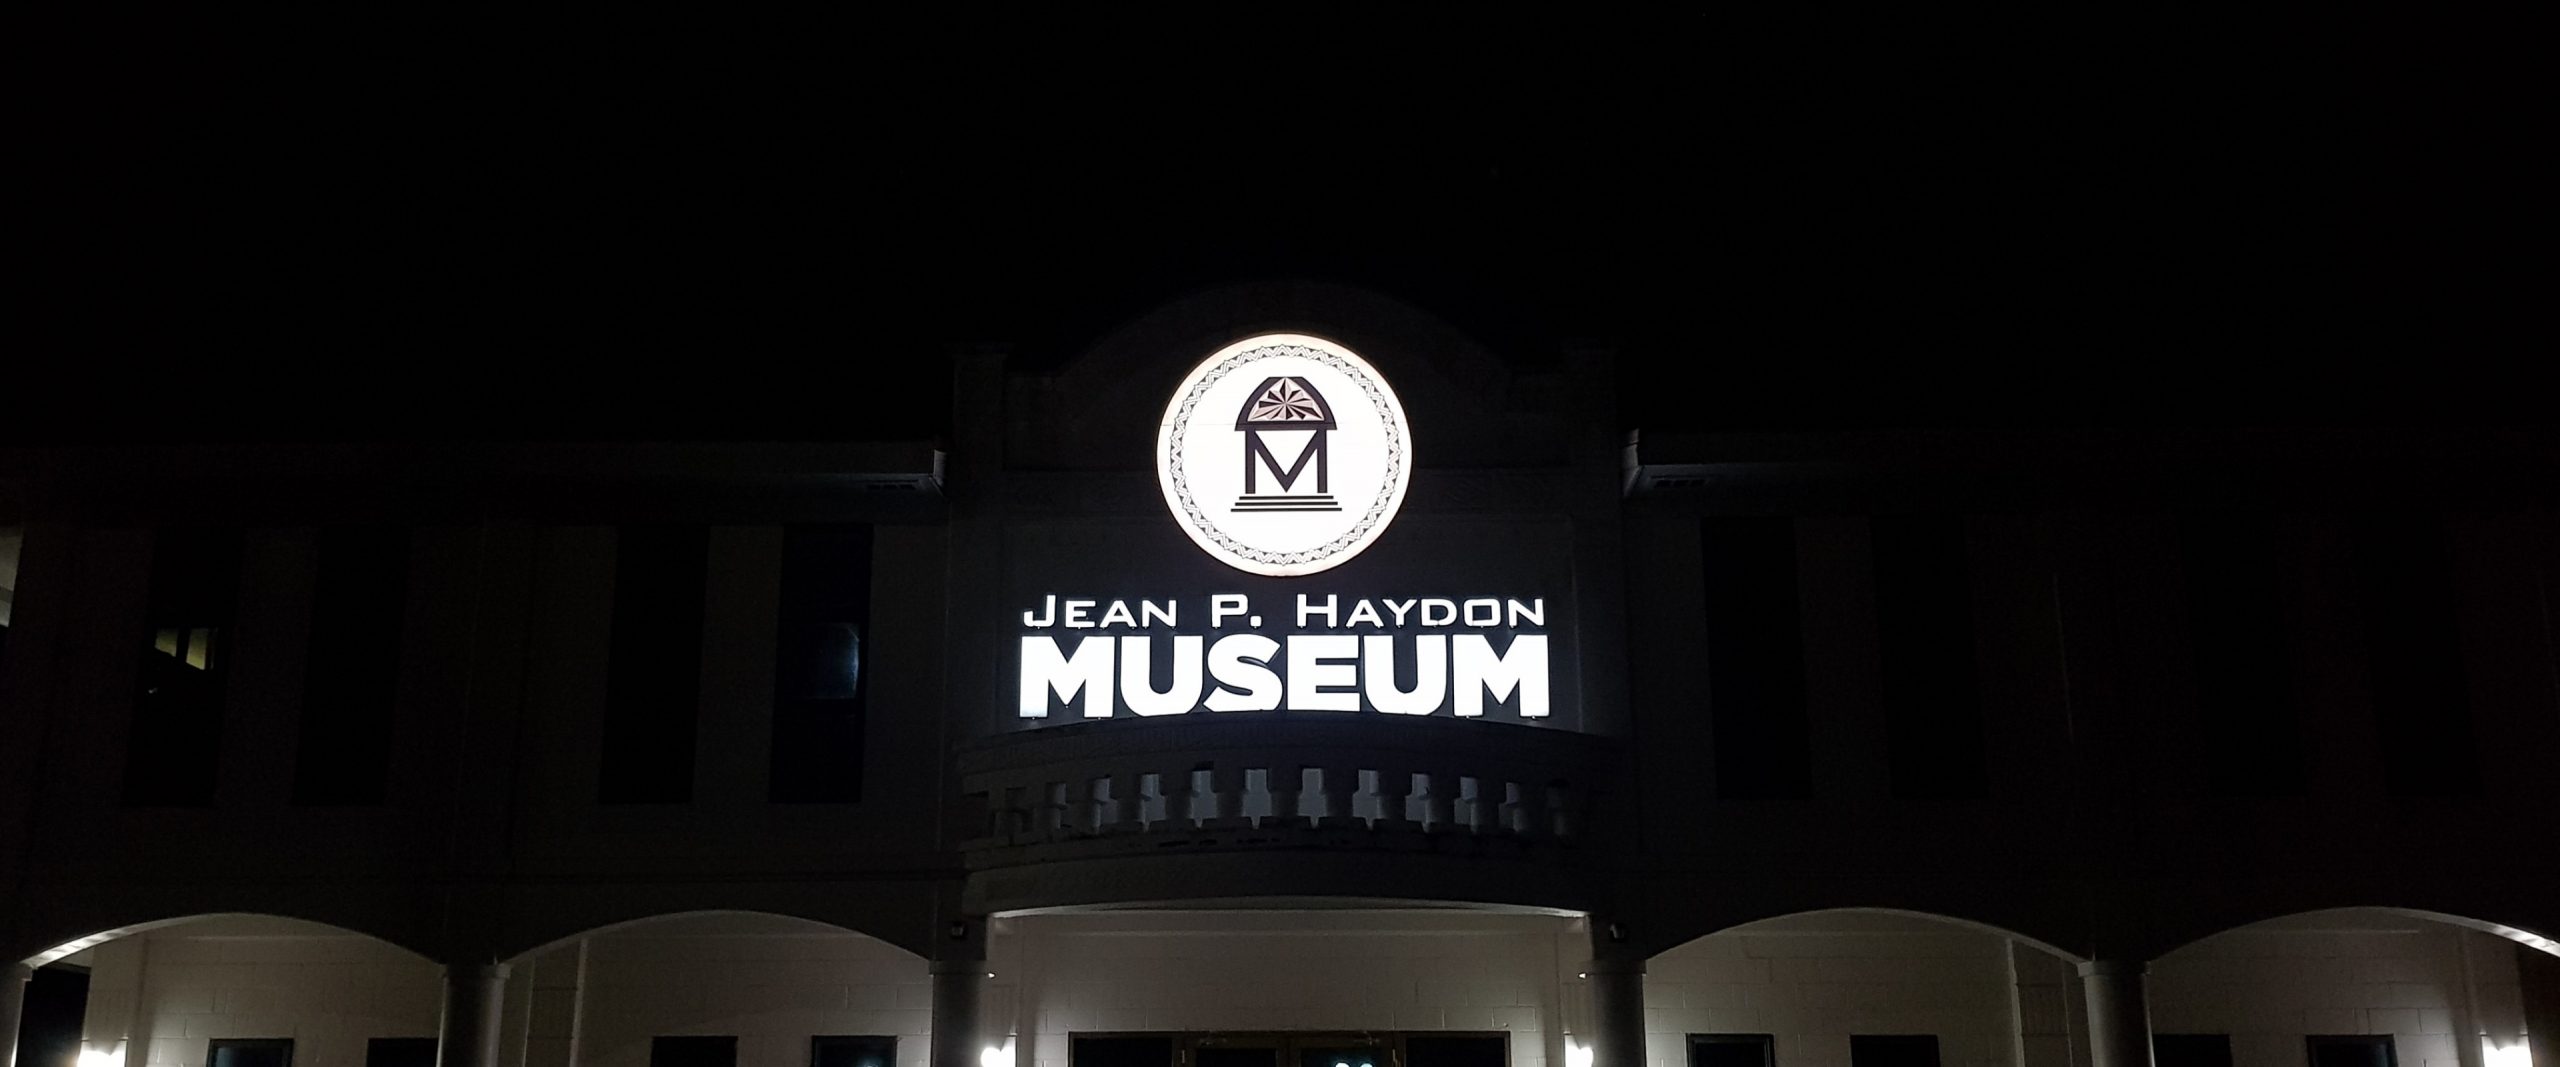 Jean P. Haydon Museum